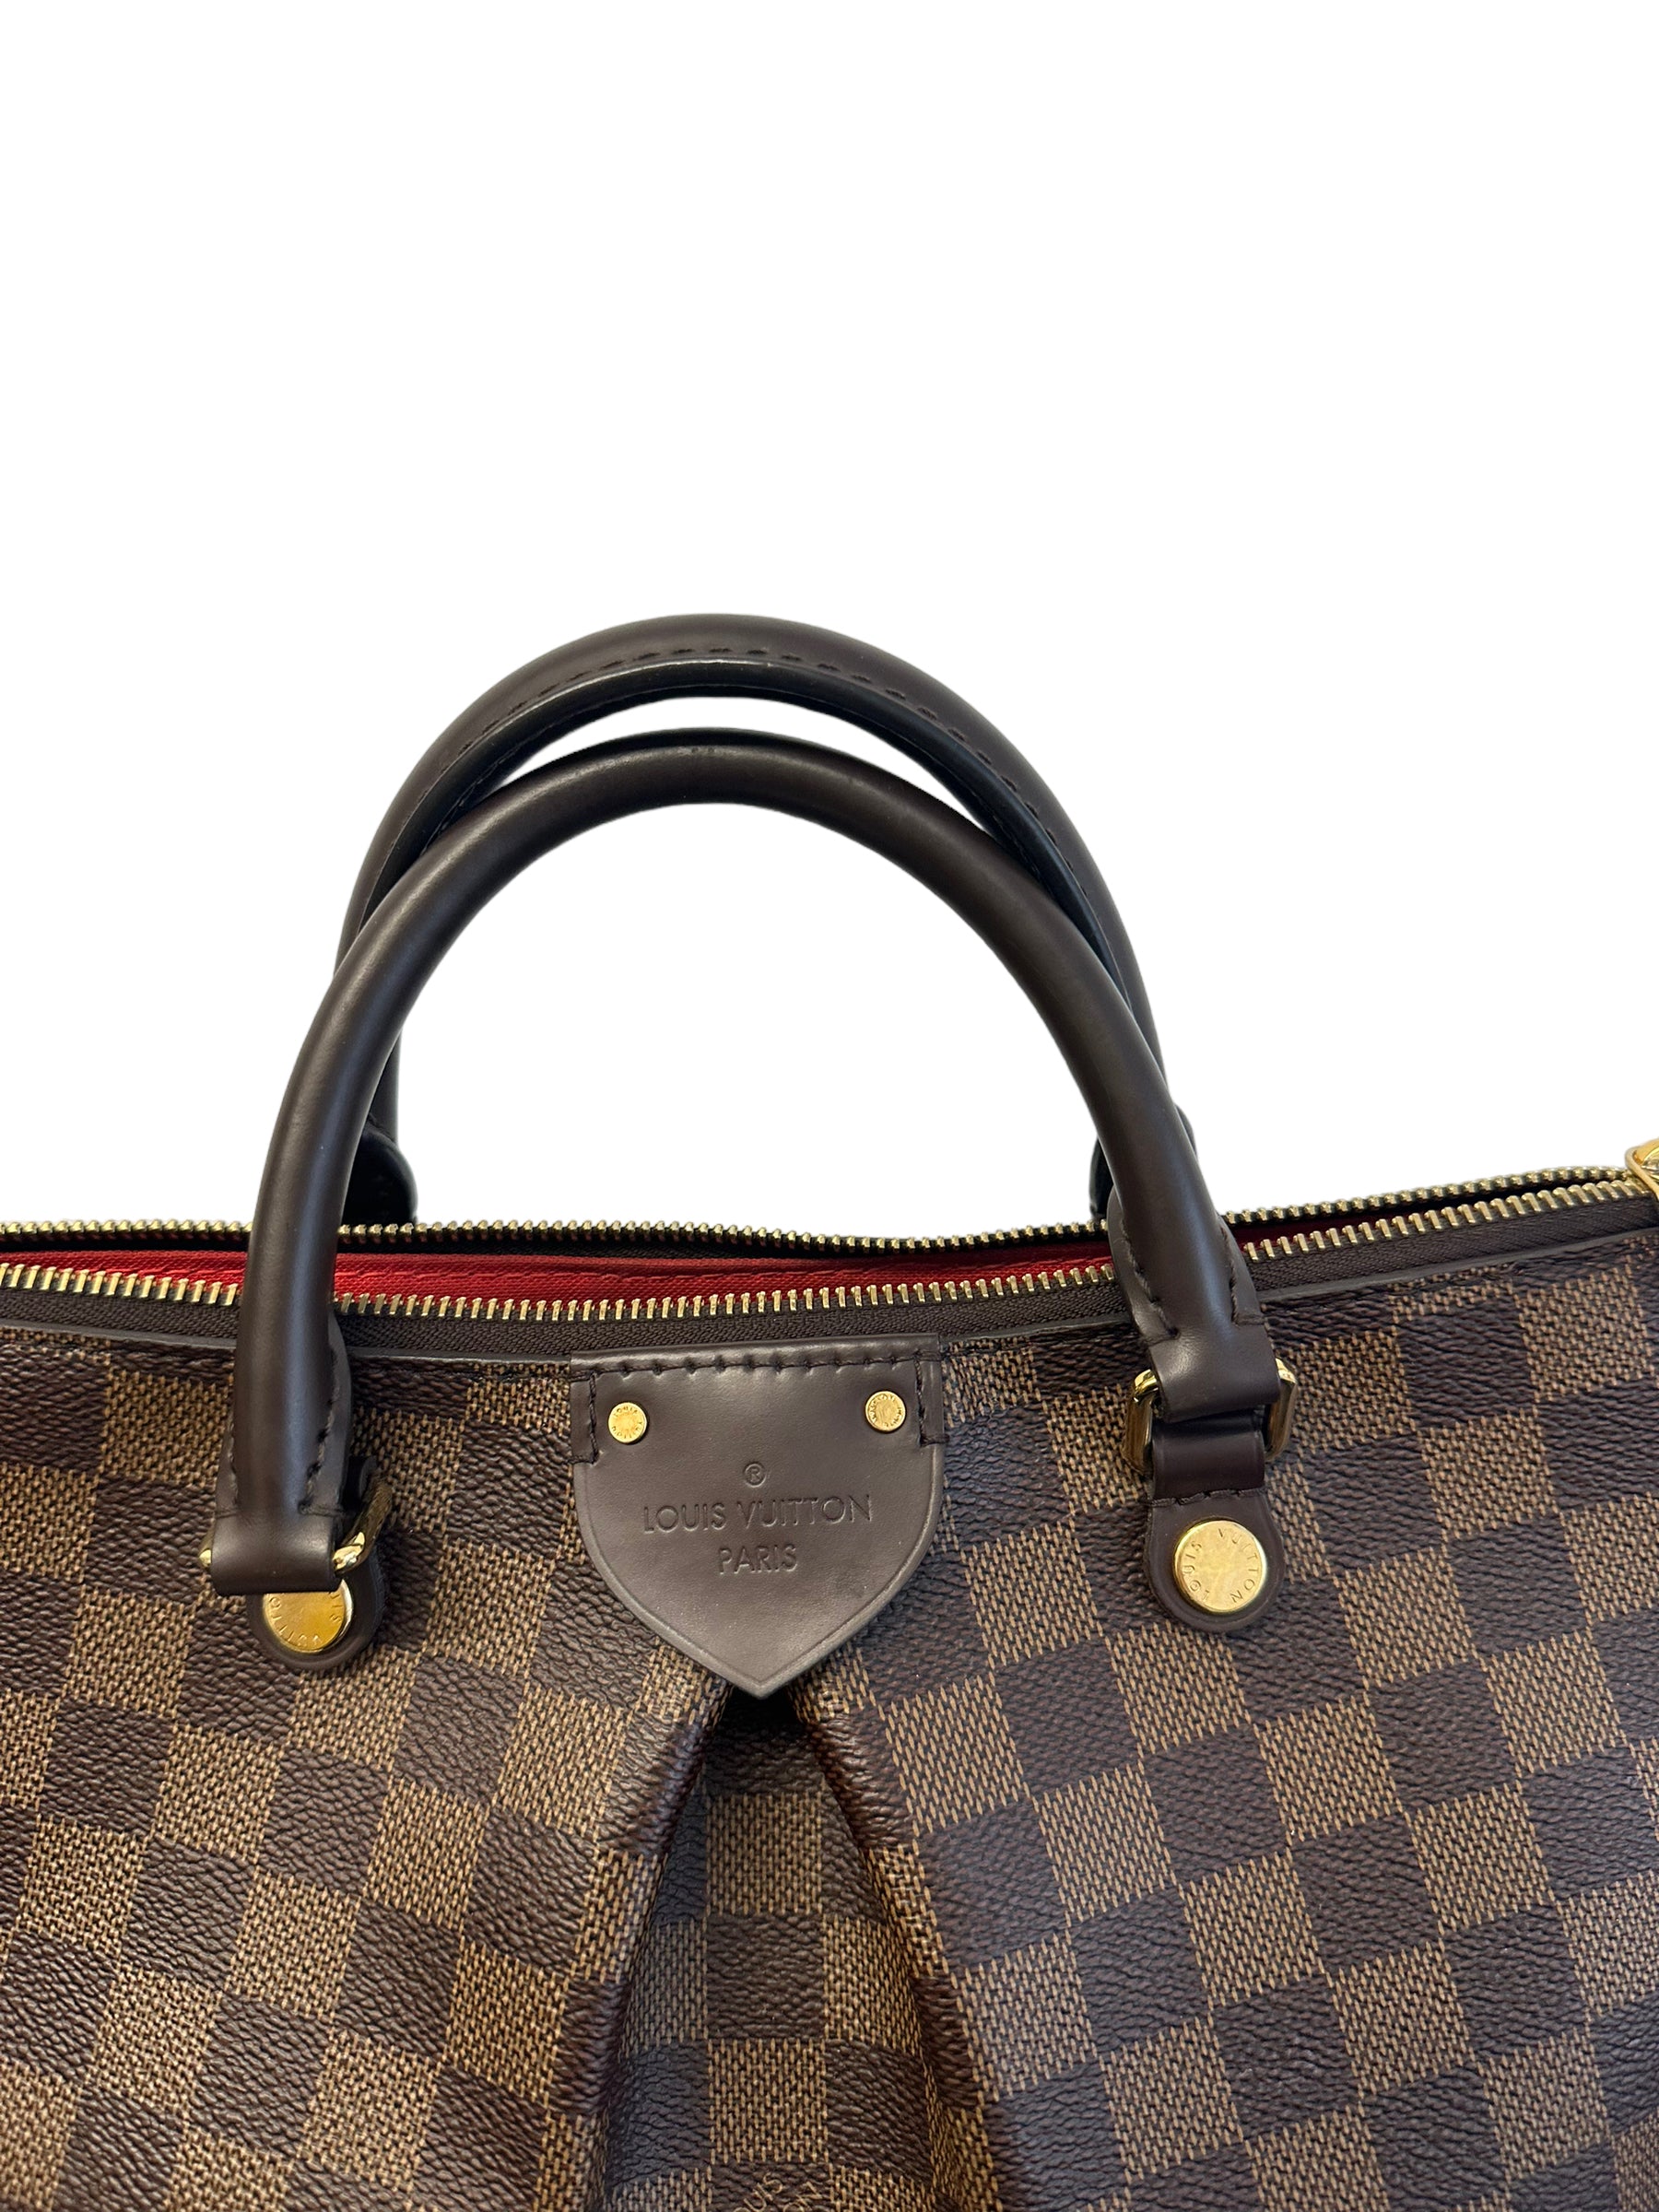 Louis Vuitton Damier Ebene Canvas Siena mm Handbag